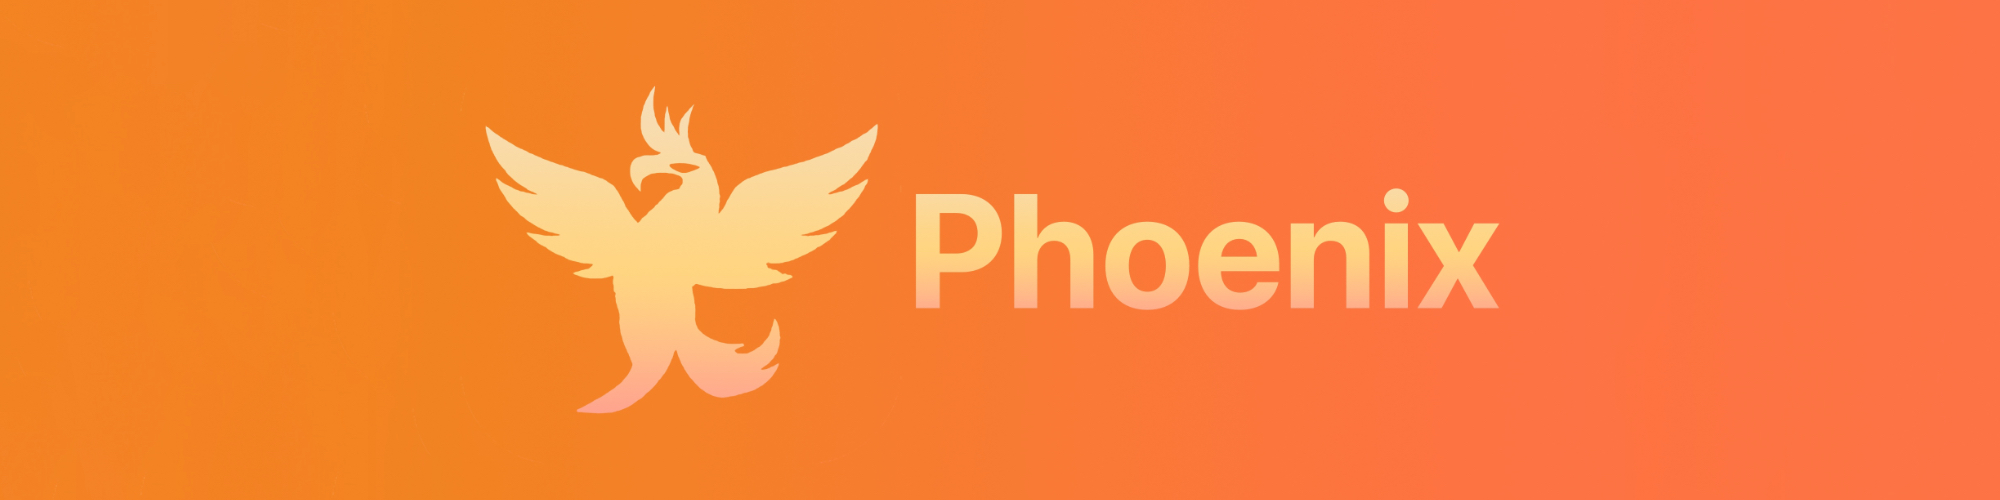 phoenix-banner-small.jpg